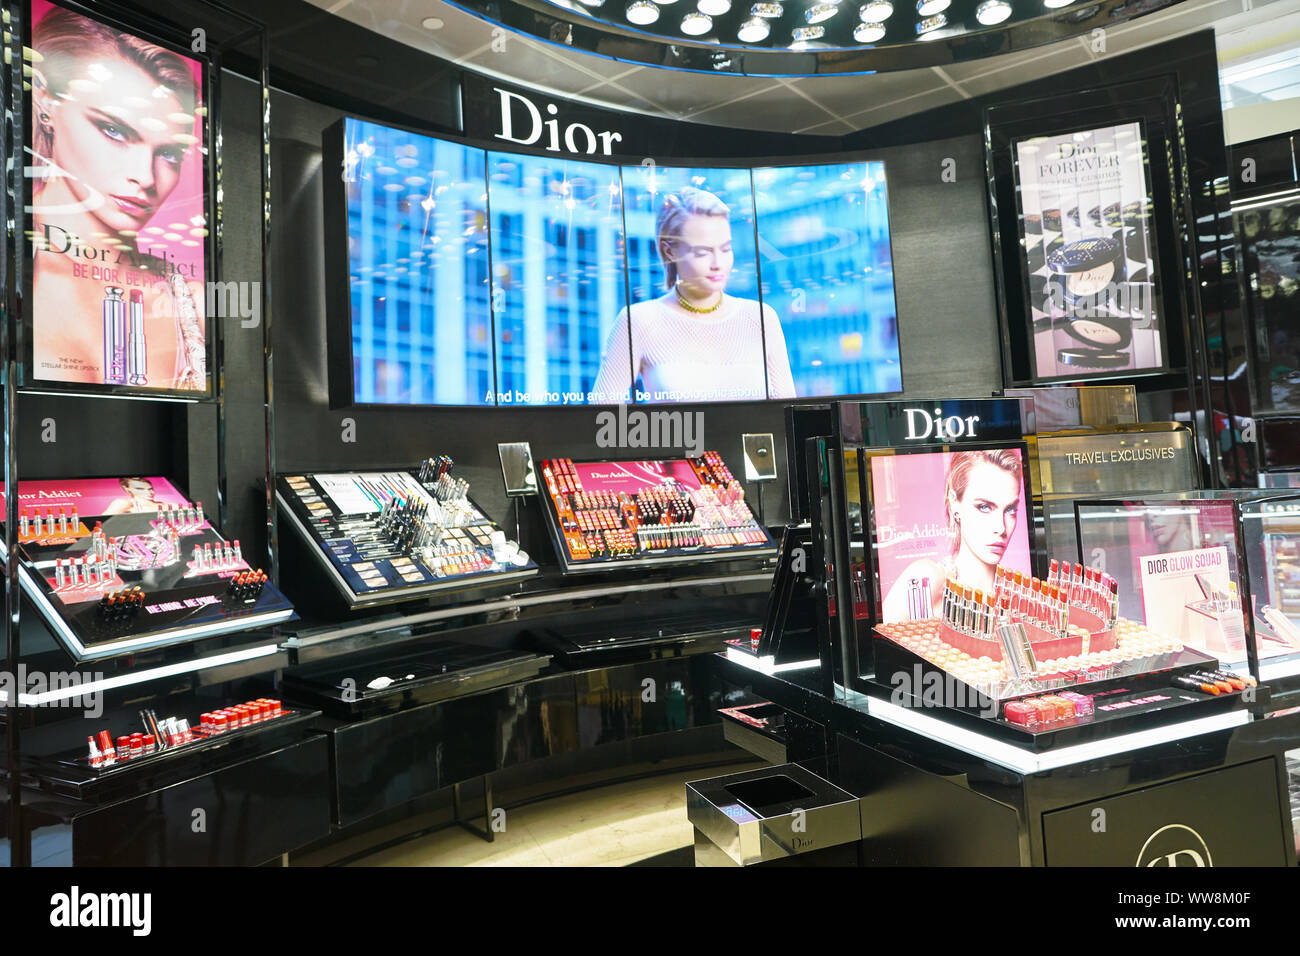 SINGAPORE - CIRCA APRIL, 2019: Dior cosmetics products on display at ...